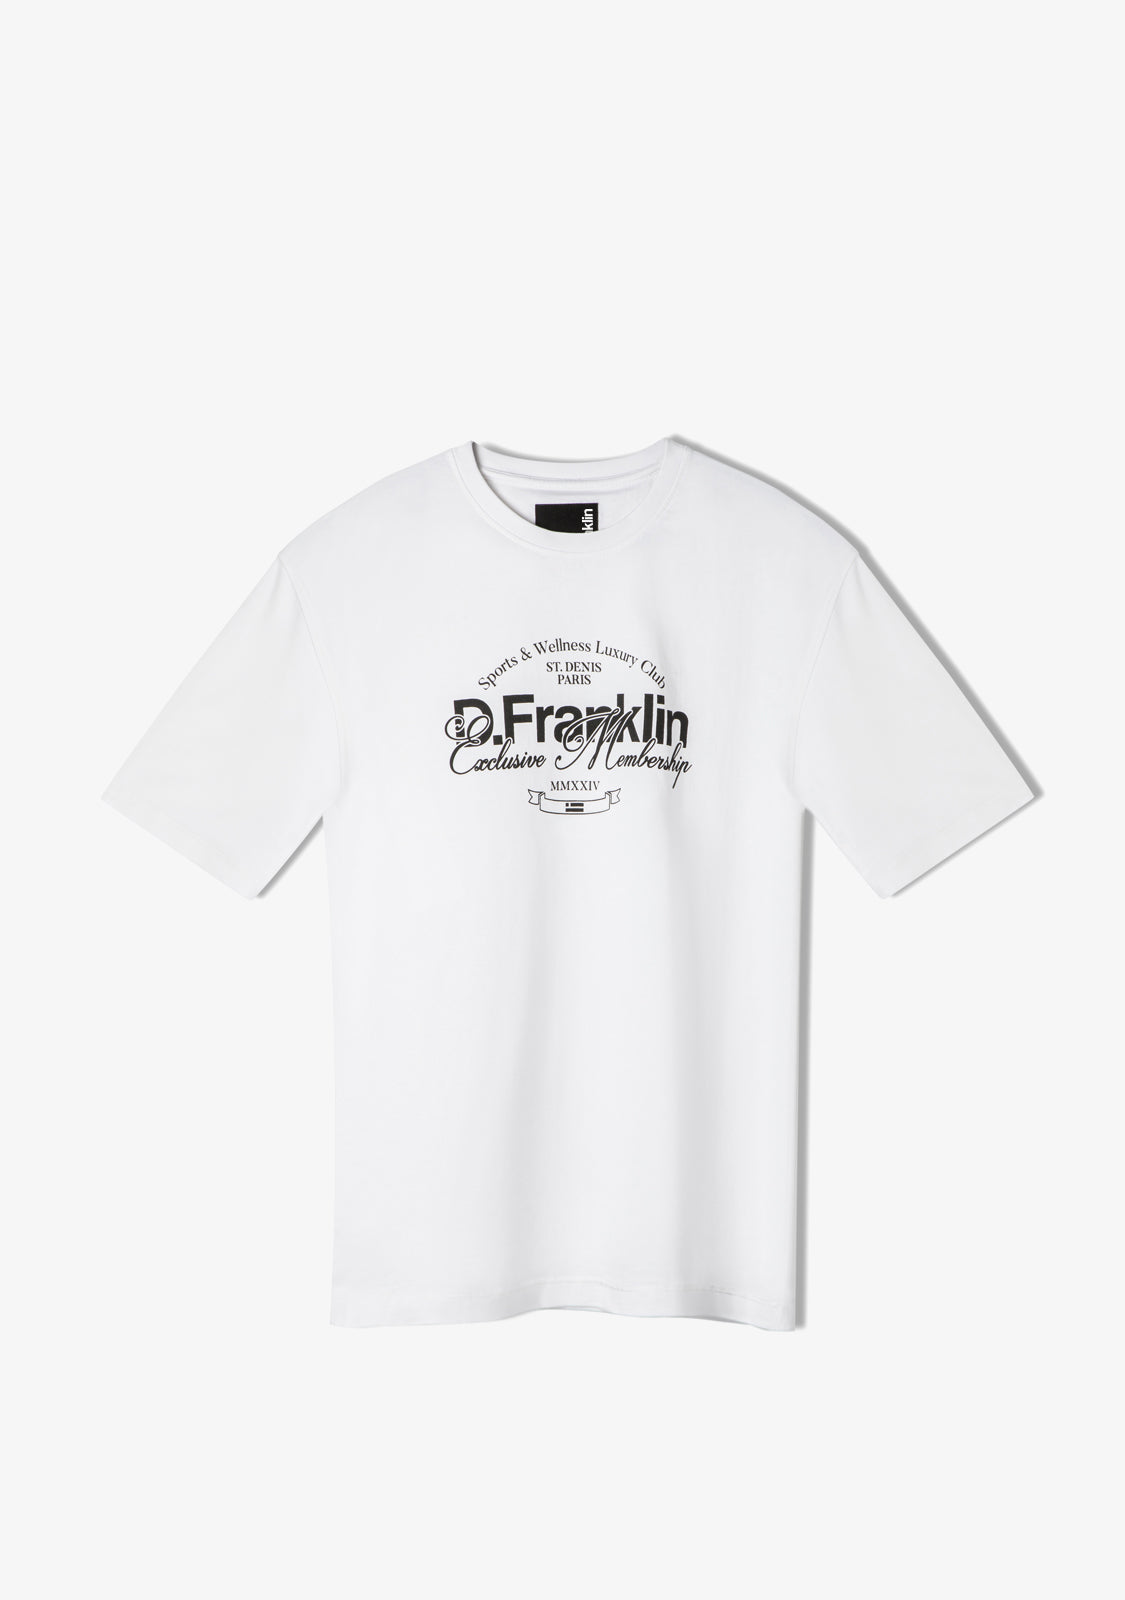 St. Denis Village T-Shirt White / Black